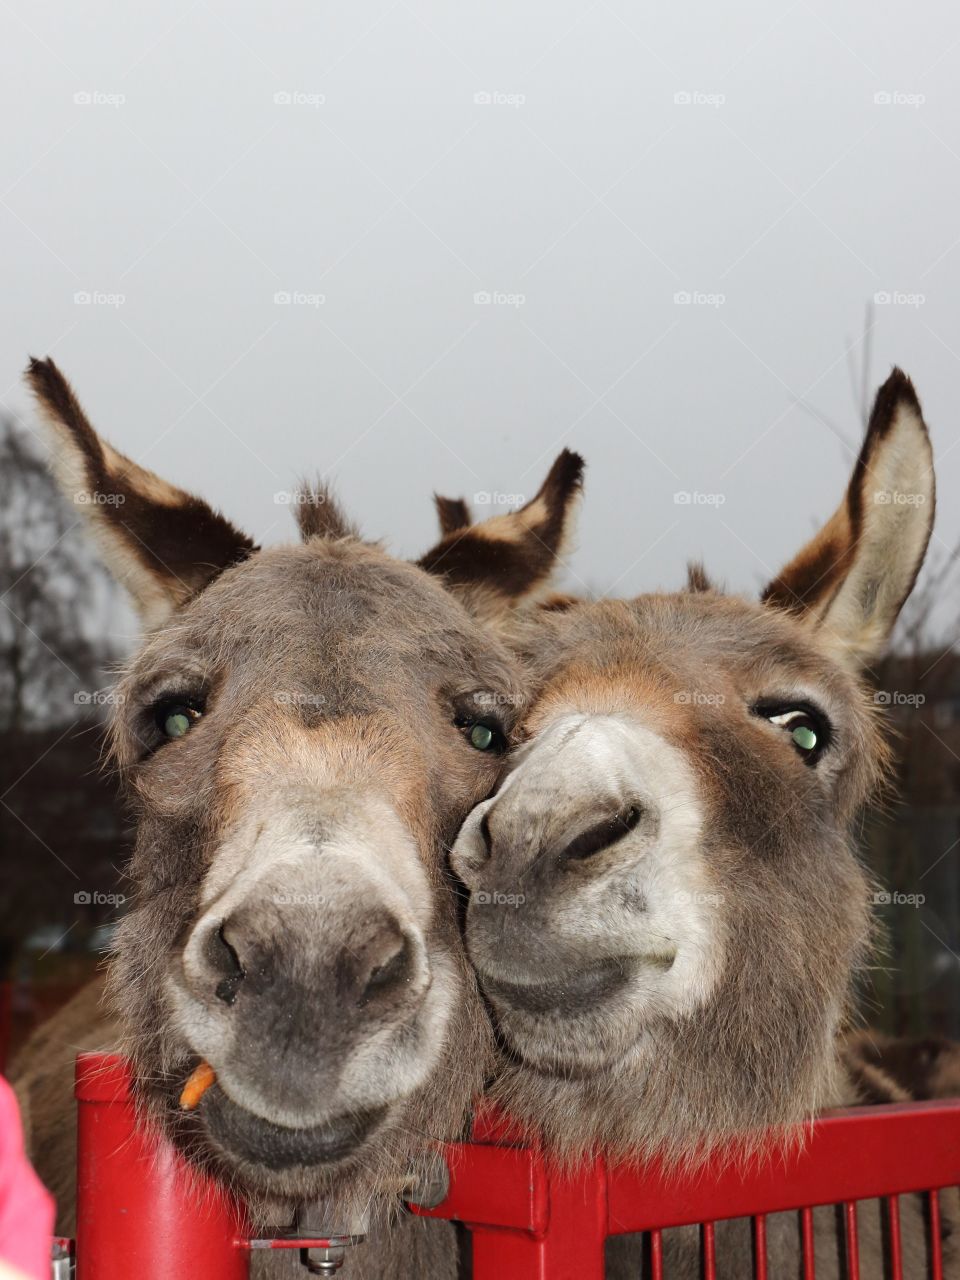 Love of two donkeys 